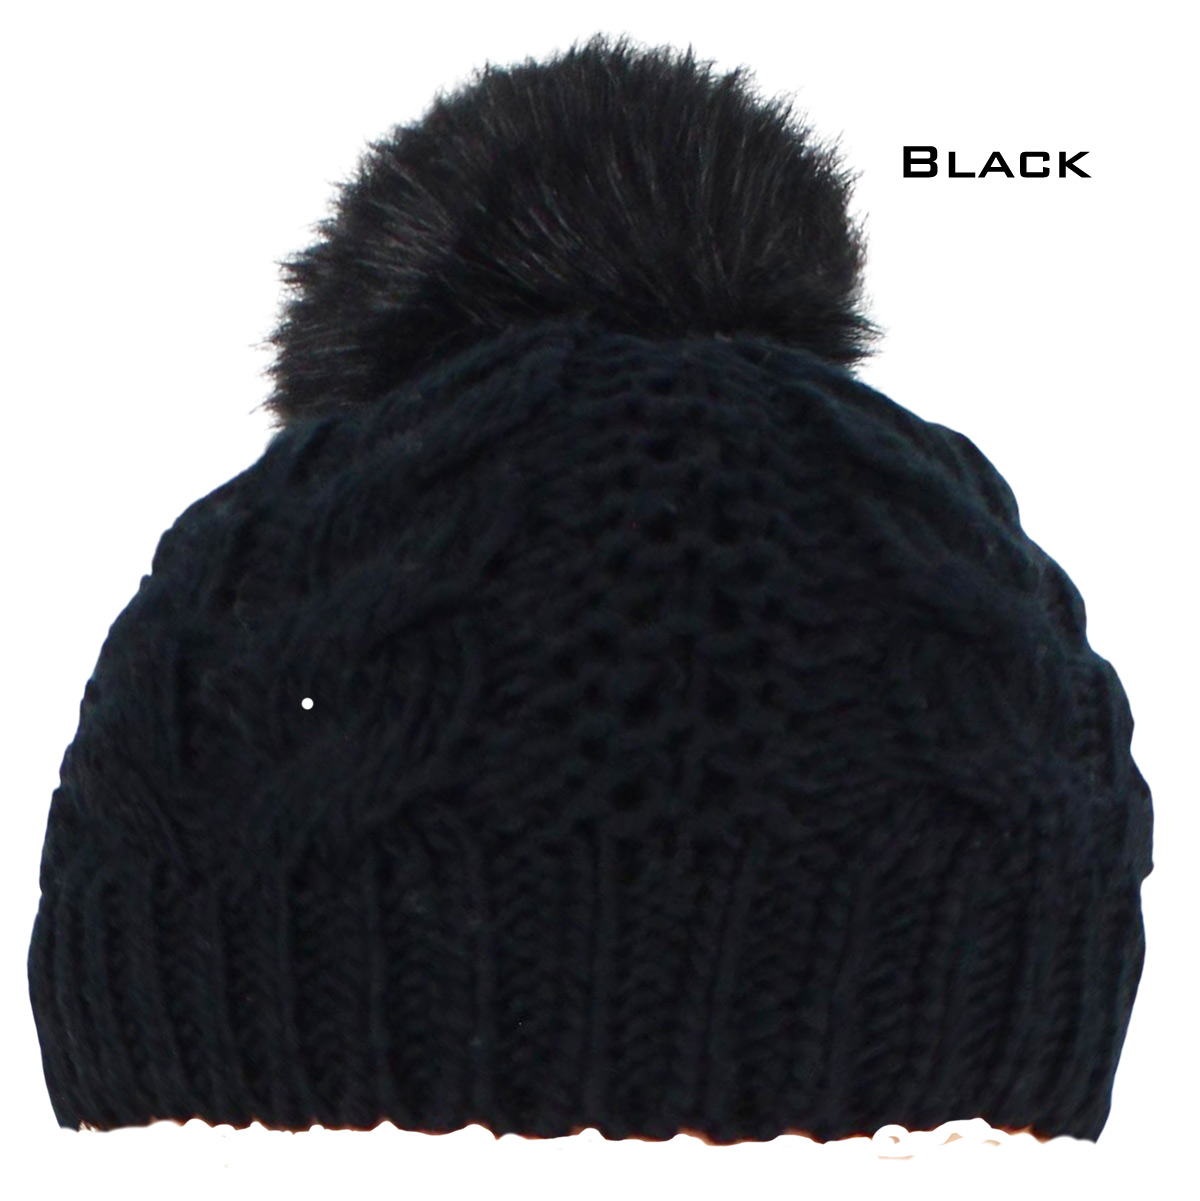 3114 - Winter Knit Hats 10027 BURGUNDY/YARN POM POM Knit Winter Hat - One Size Fits Most